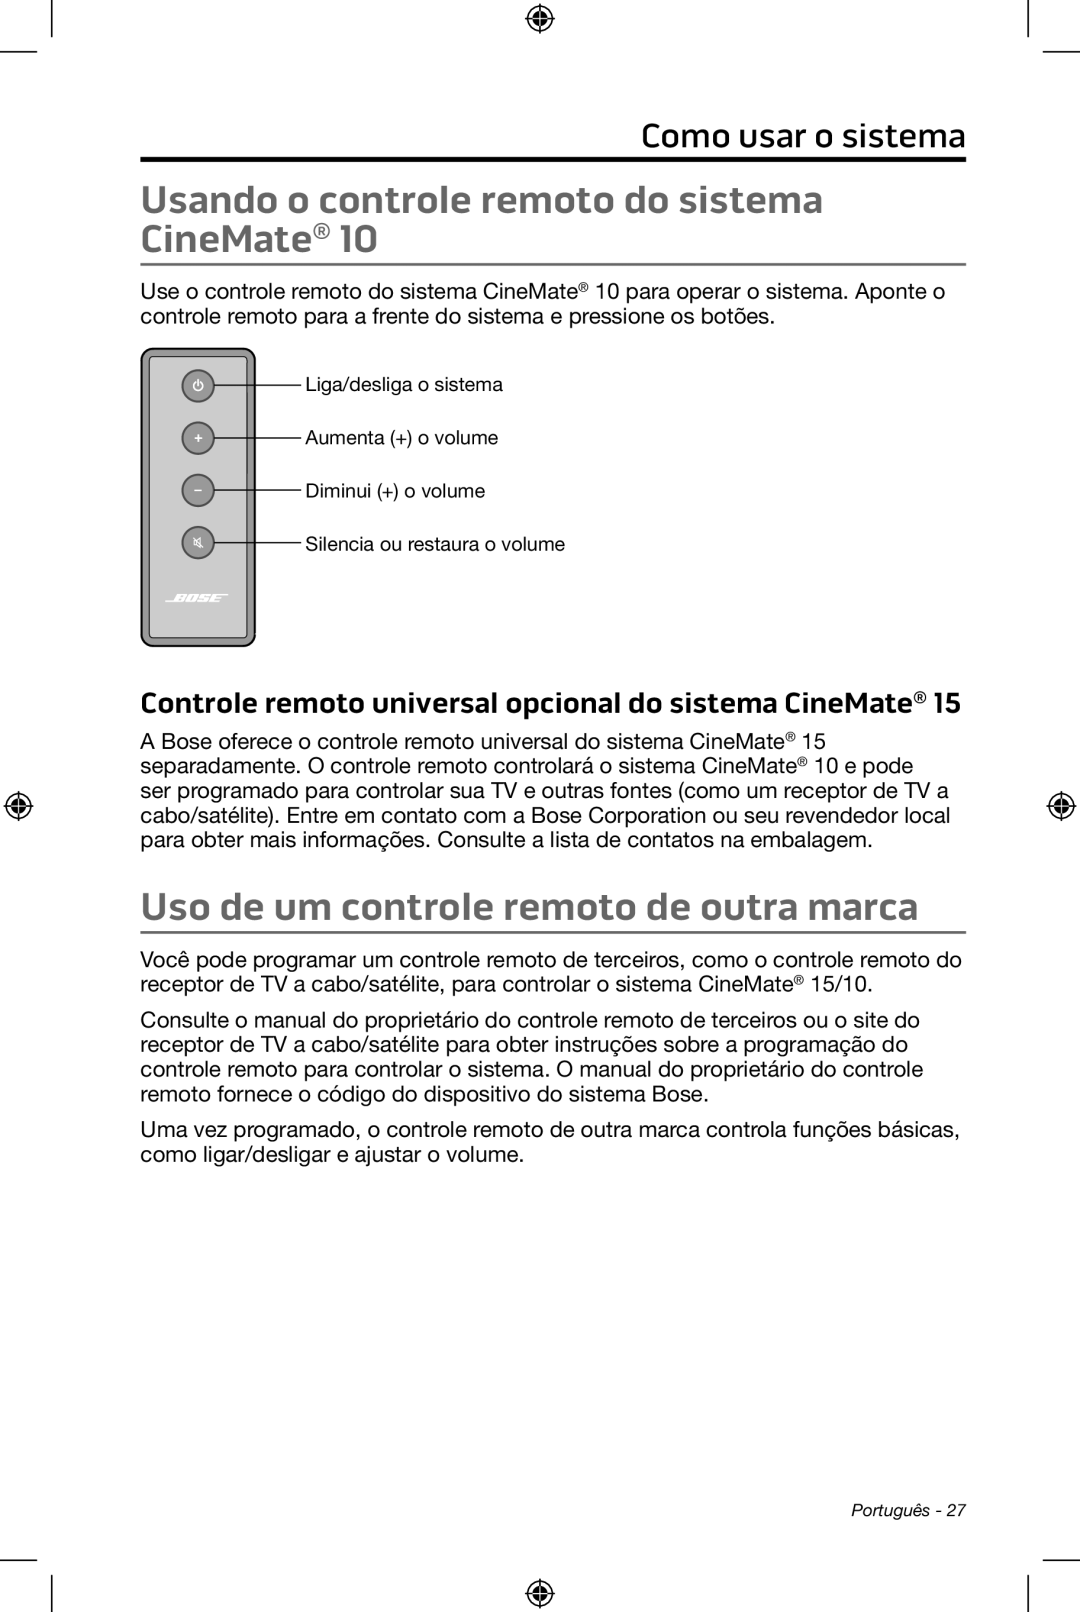 Bose CineMate 15/10 manual Usando o controle remoto do sistema CineMate, Uso de um controle remoto de outra marca 